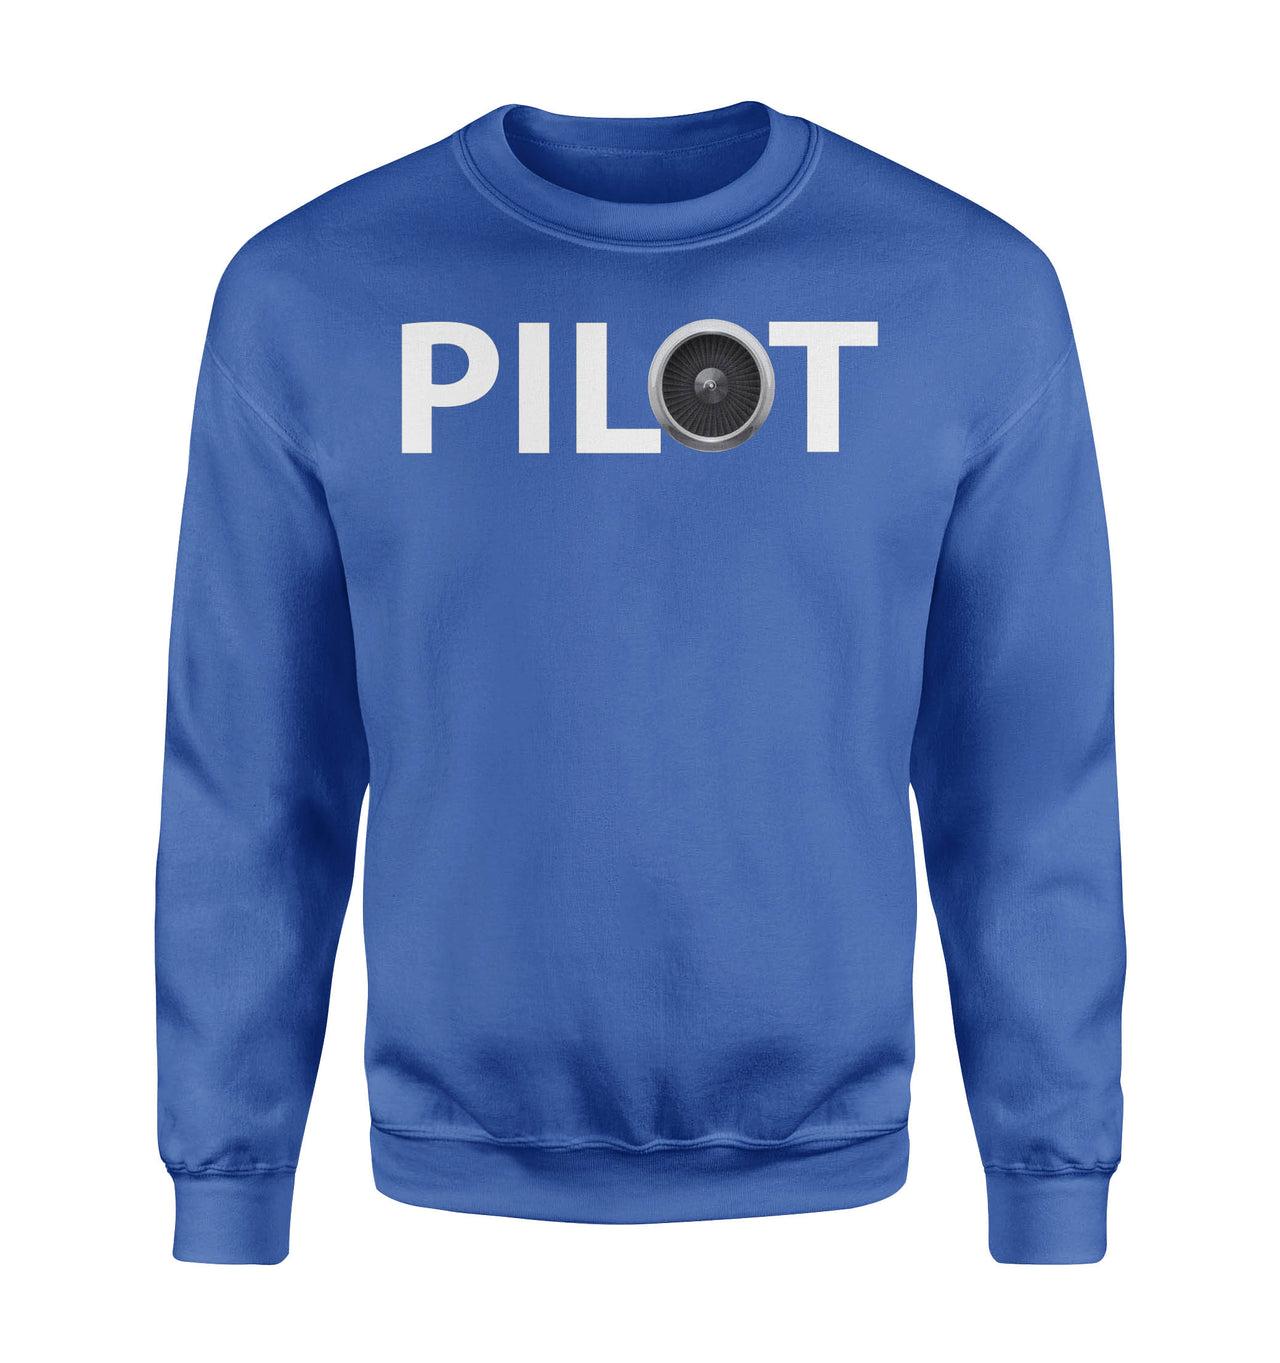 Pilot & Jet Engine Designed Sweatshirts